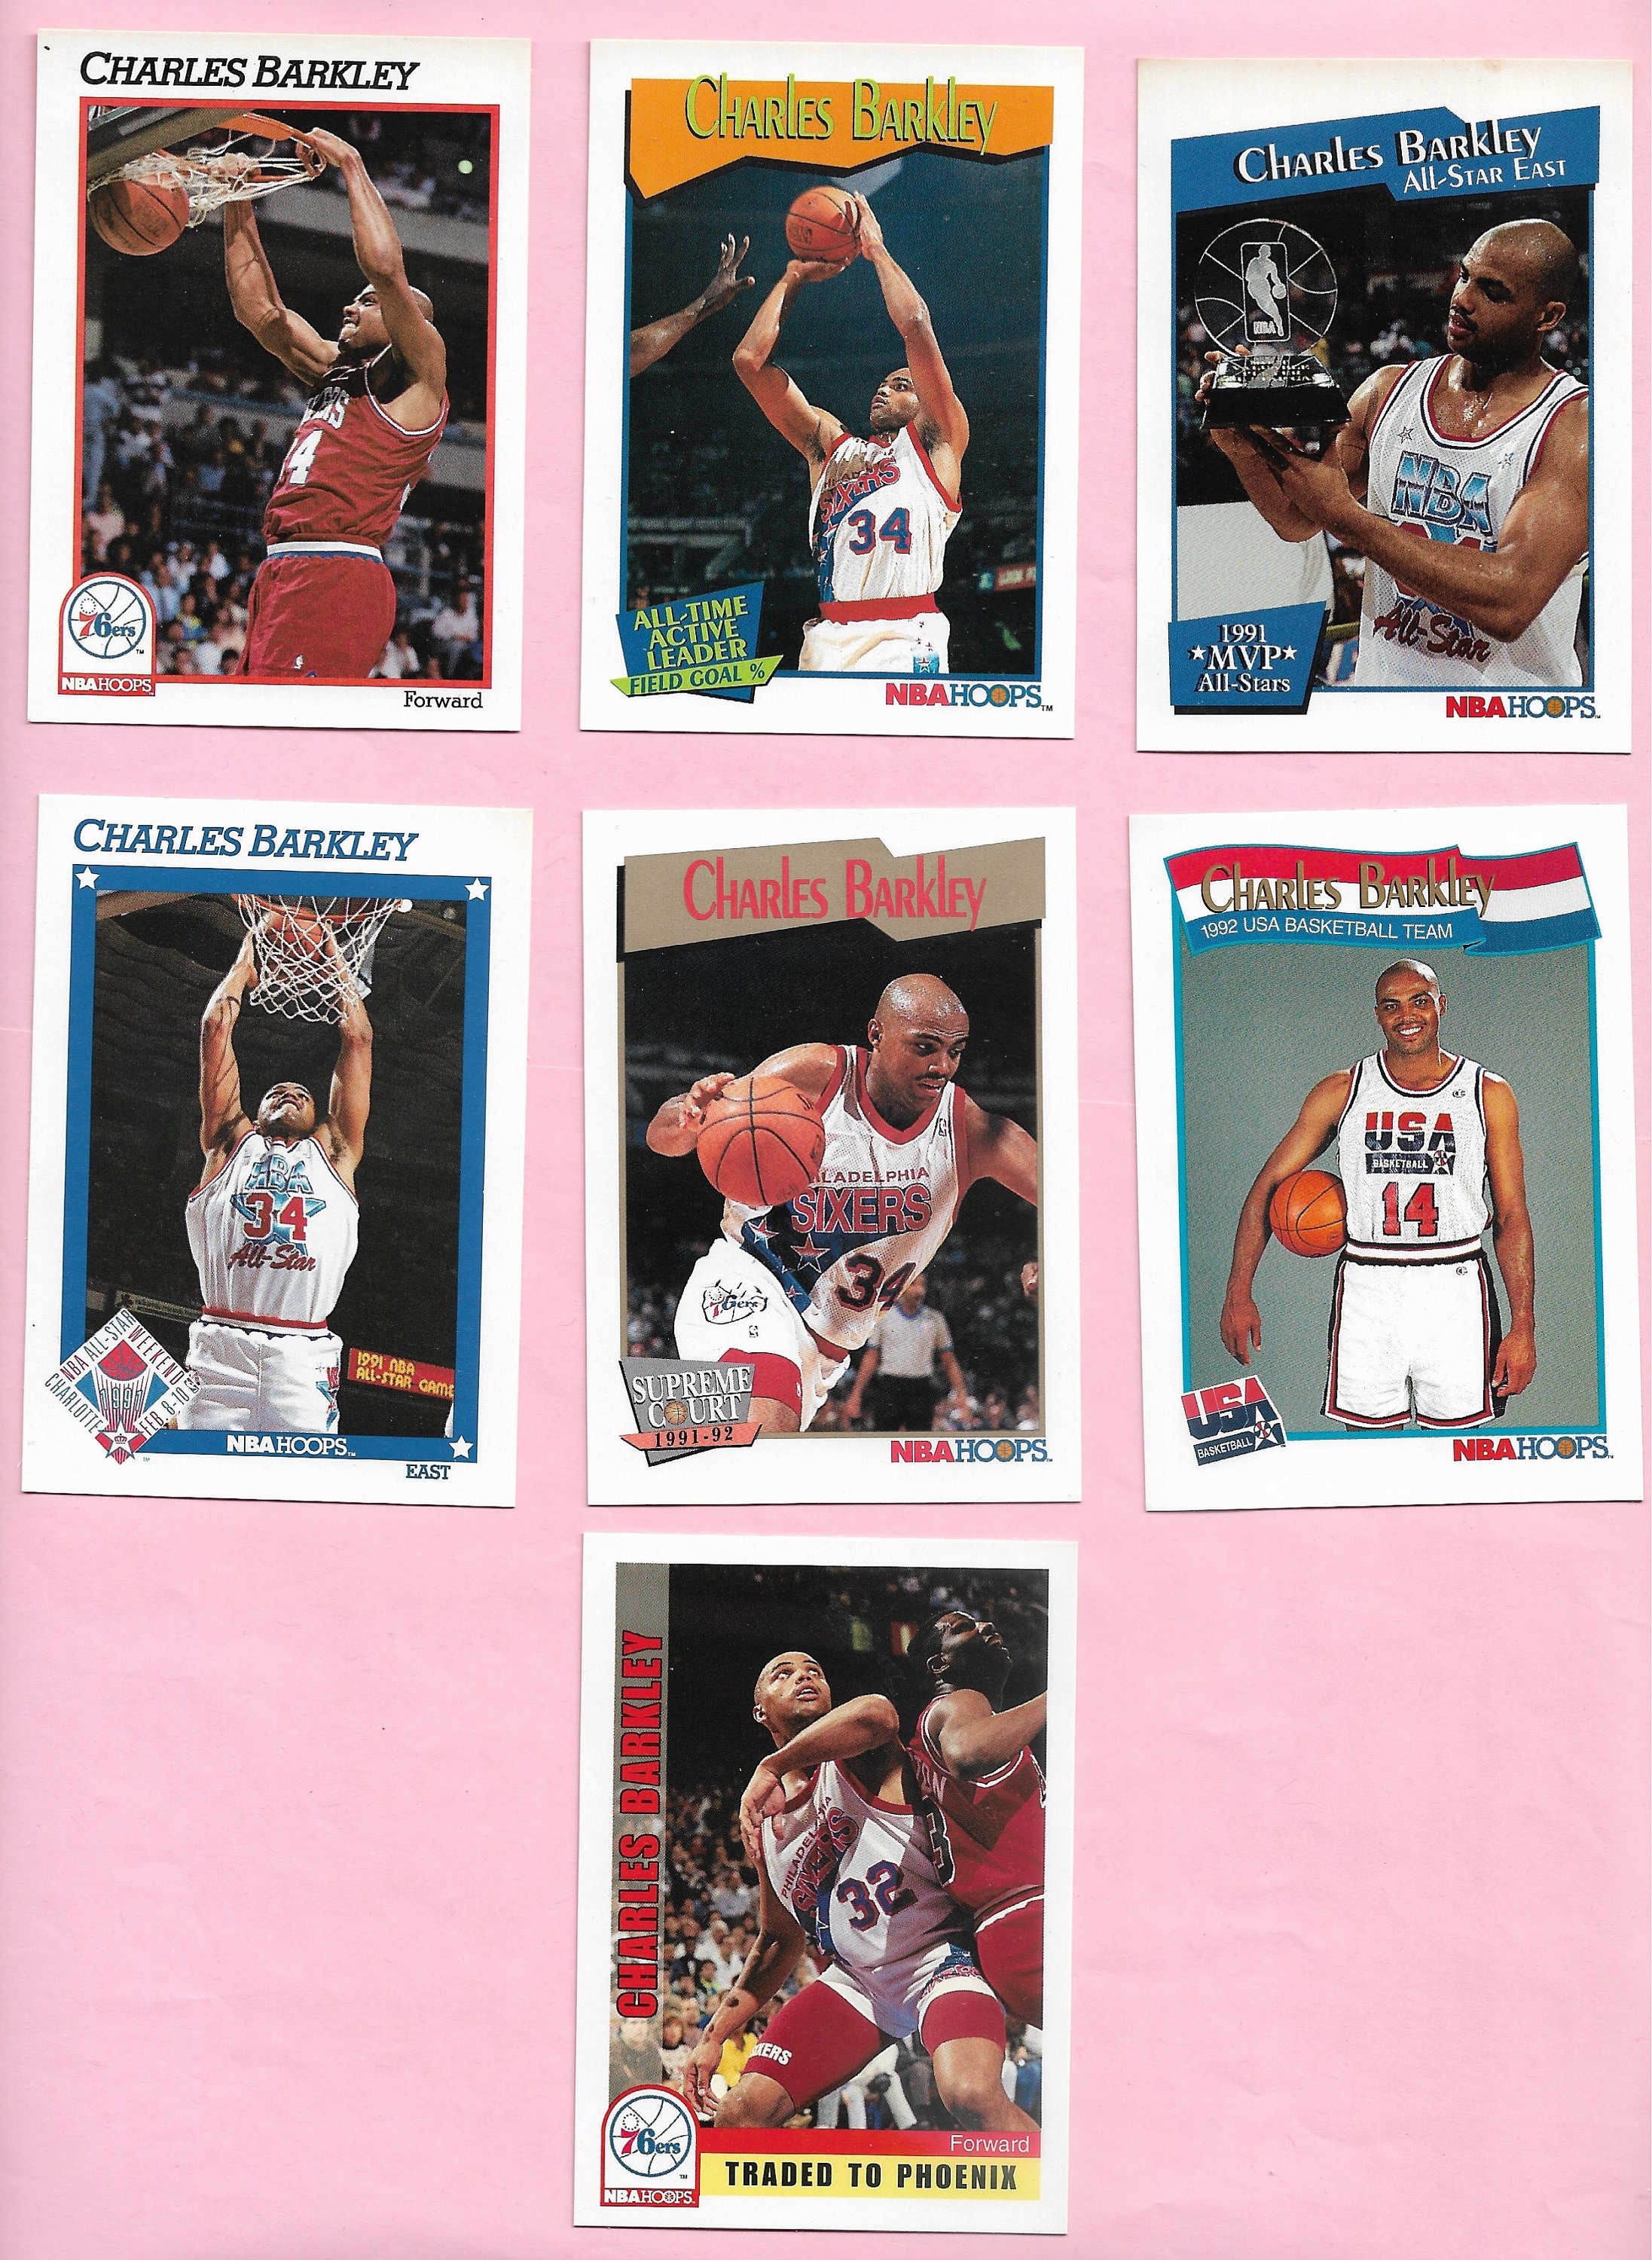 Larry Bird 1991 Skybox USA Basketball Team Card #531 Graded PSA 9